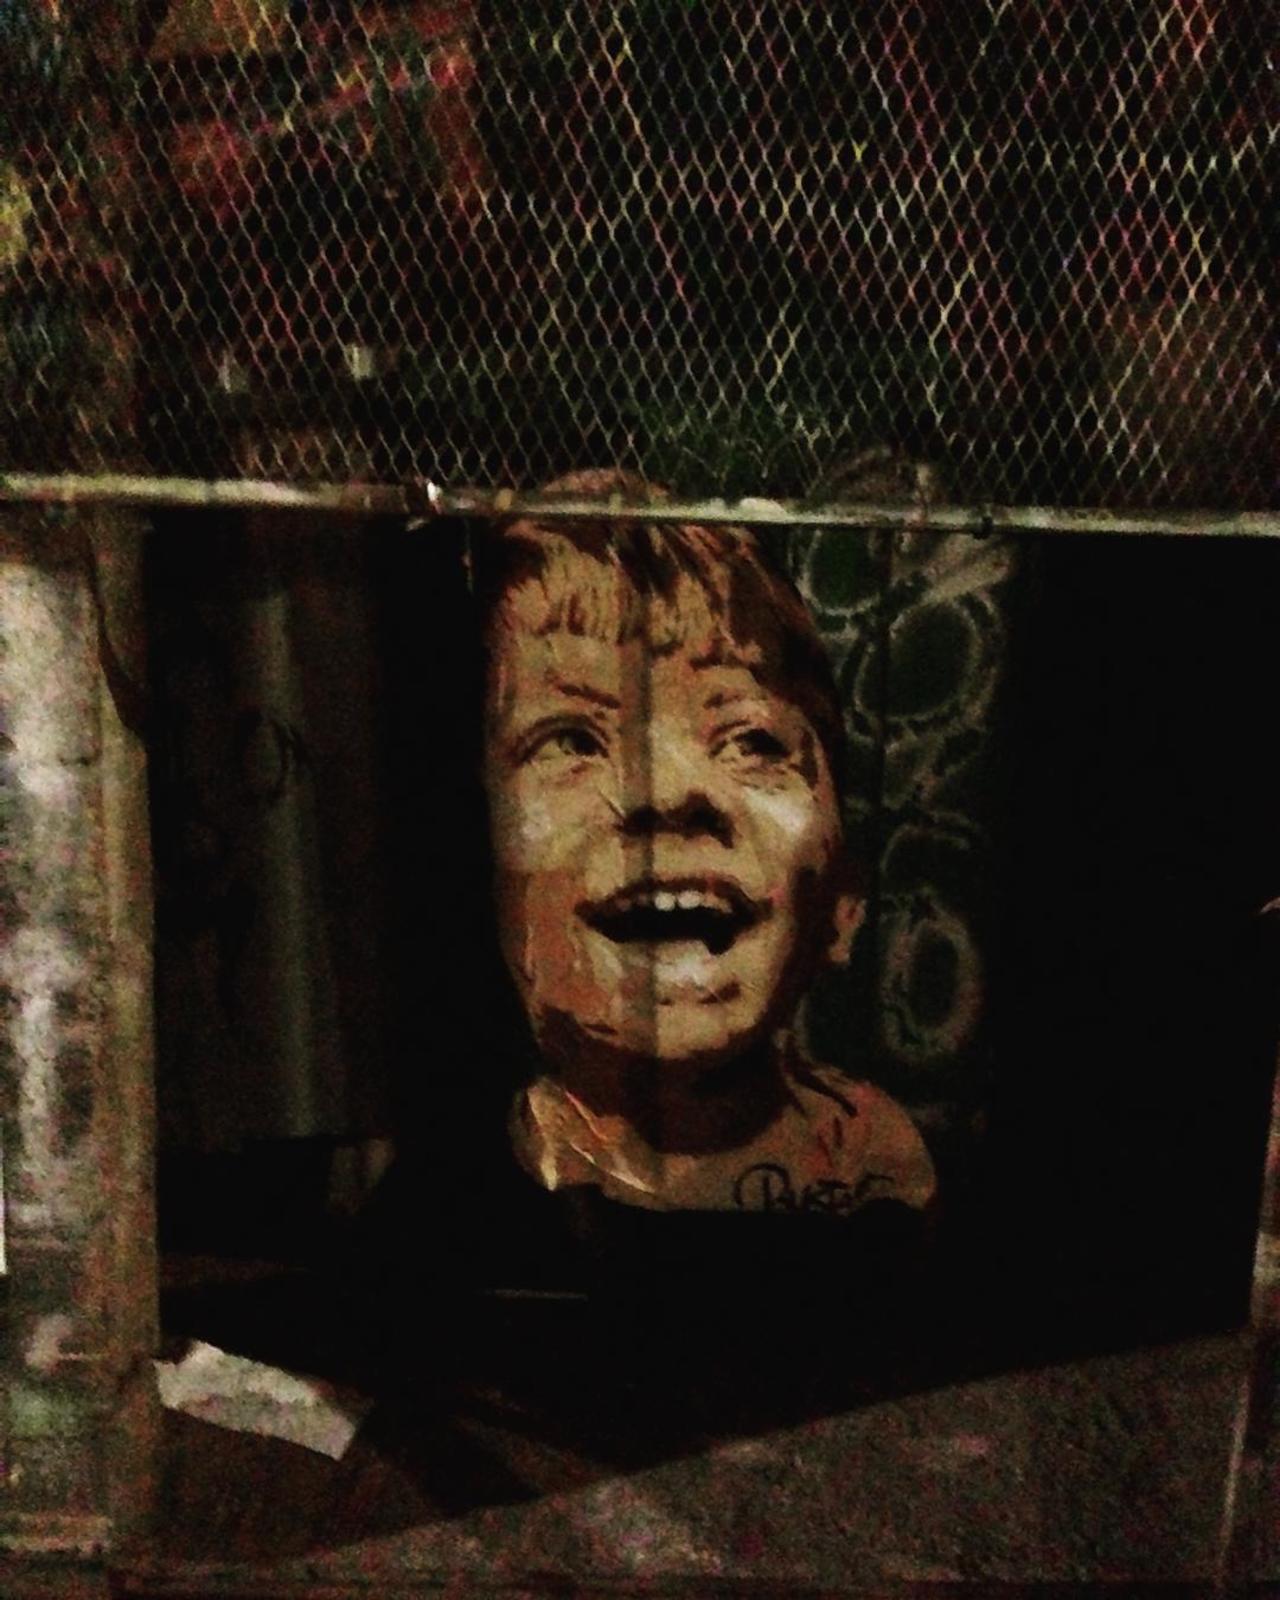 circumjacent_fr: #Paris #graffiti photo by streetrorart http://ift.tt/1OYURCc #StreetArt https://t.co/w7HMvbGXjD